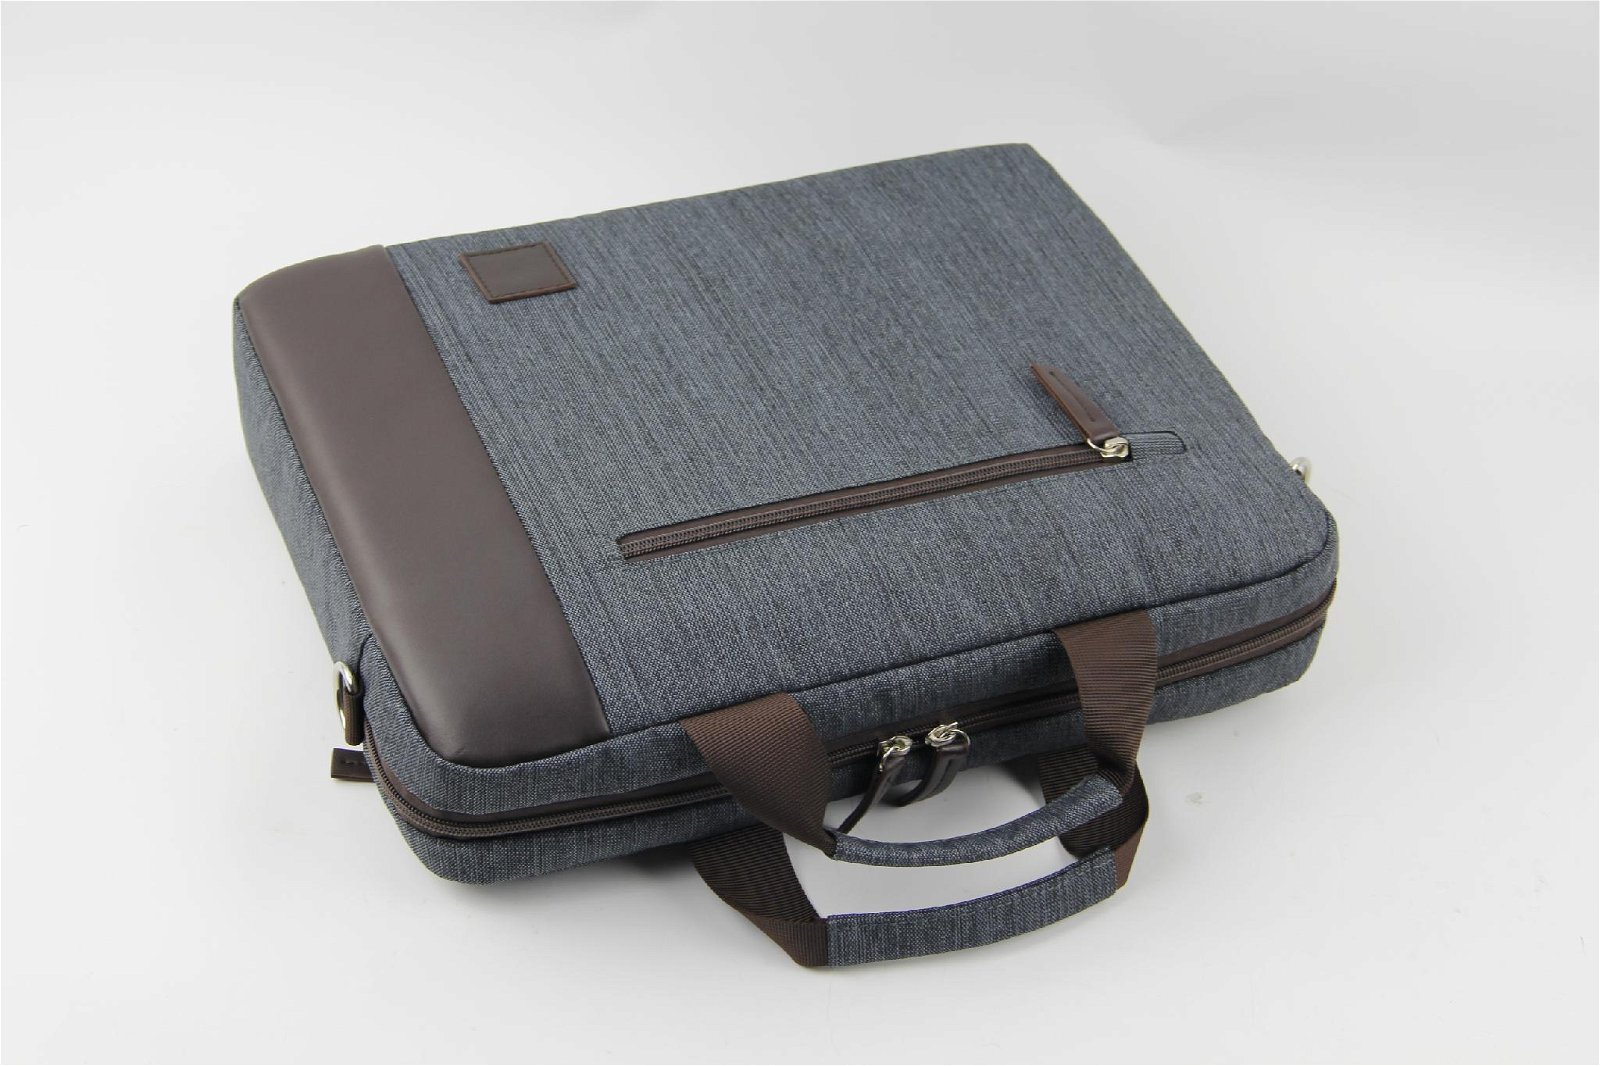 New arrival good design high quality laptop bag  2